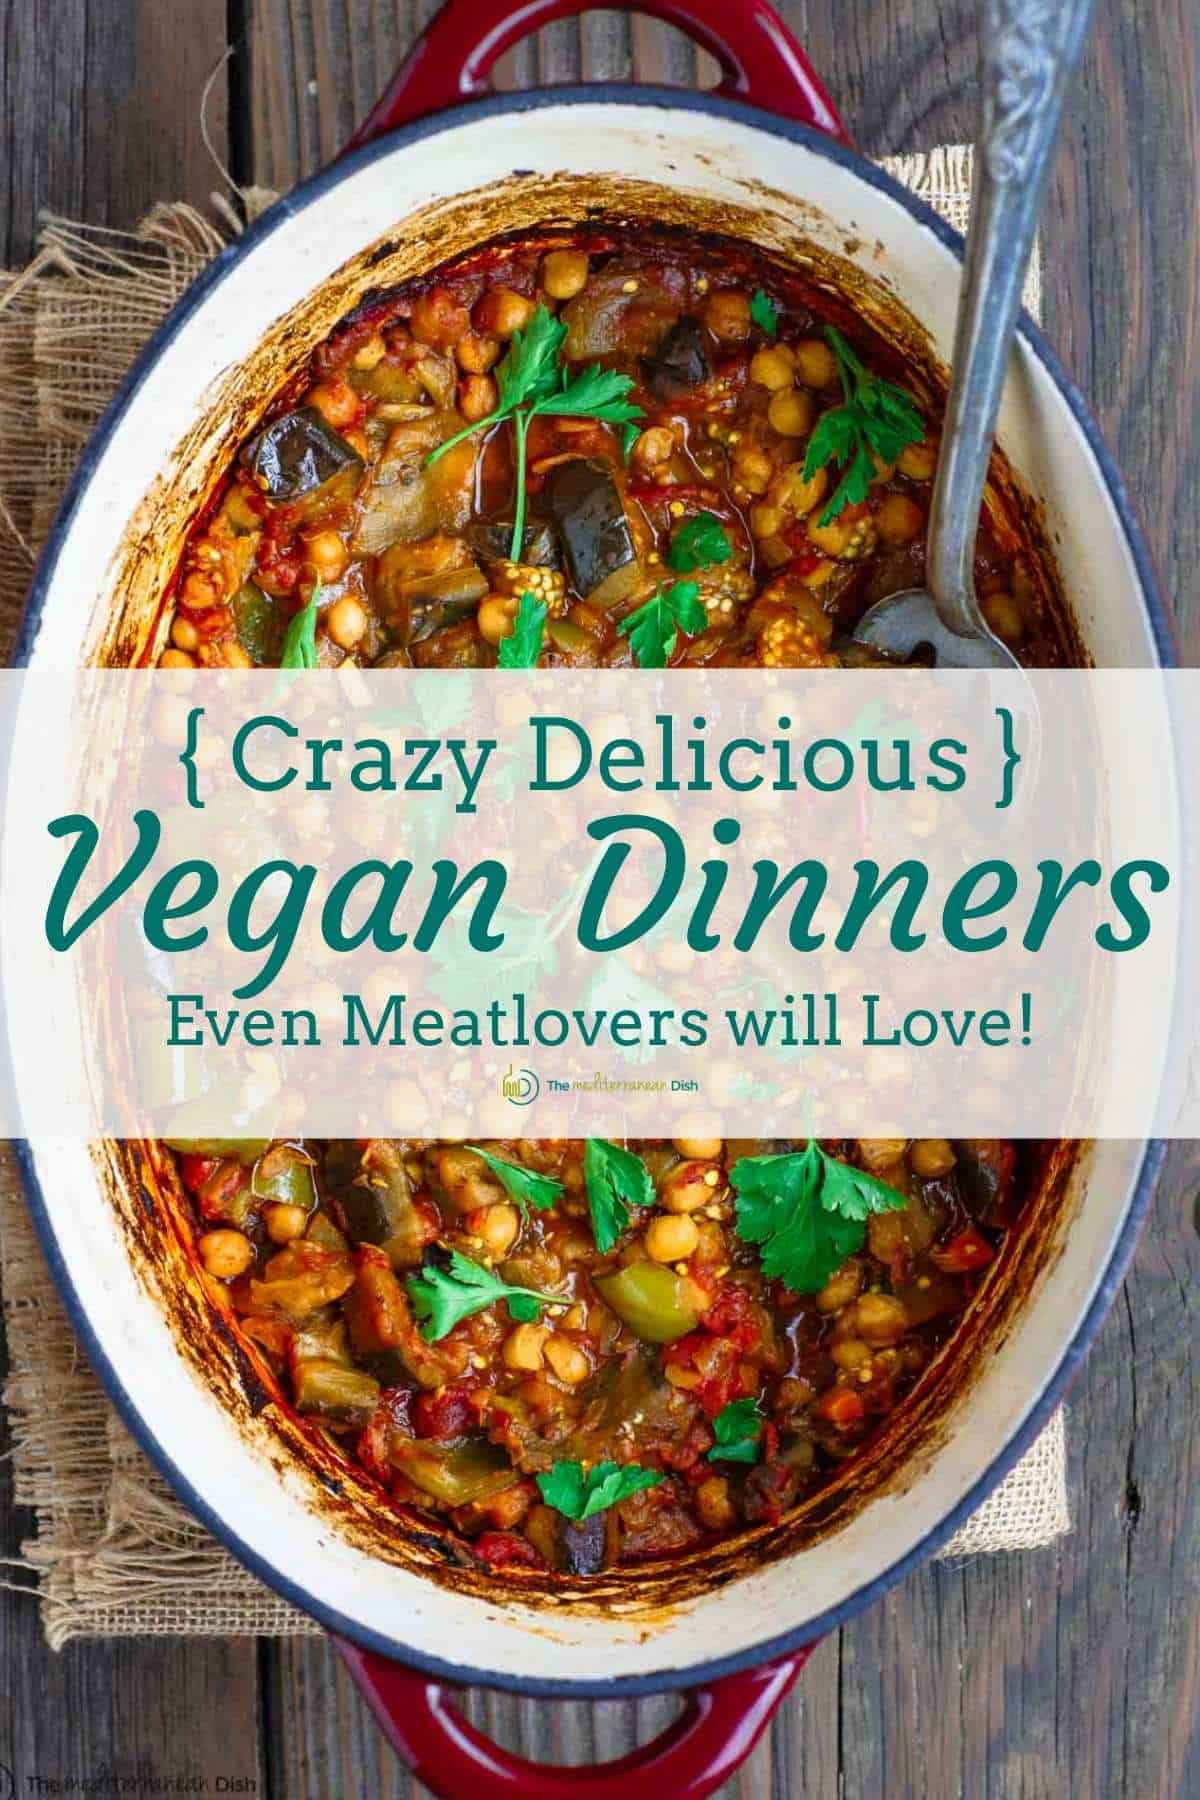 Vegan-friendly dinner ideas